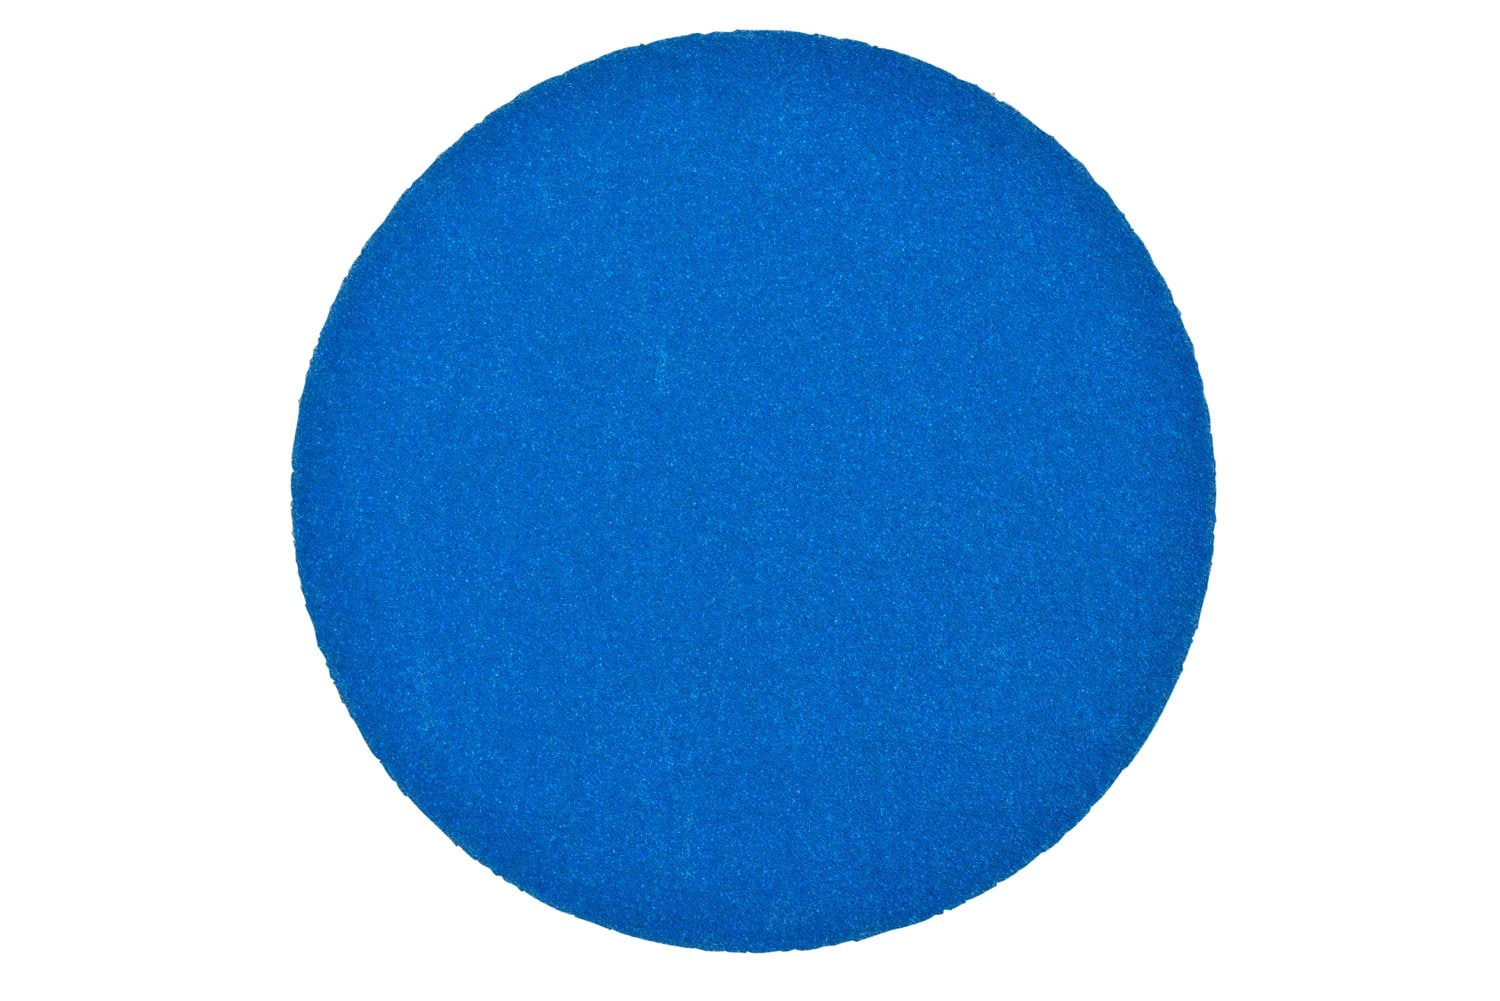 7100199259 - 3M Hookit Blue Abrasive Disc, 36243, 6 in, 150 grade, No Hole, 50 discs per carton, 4 cartons per case